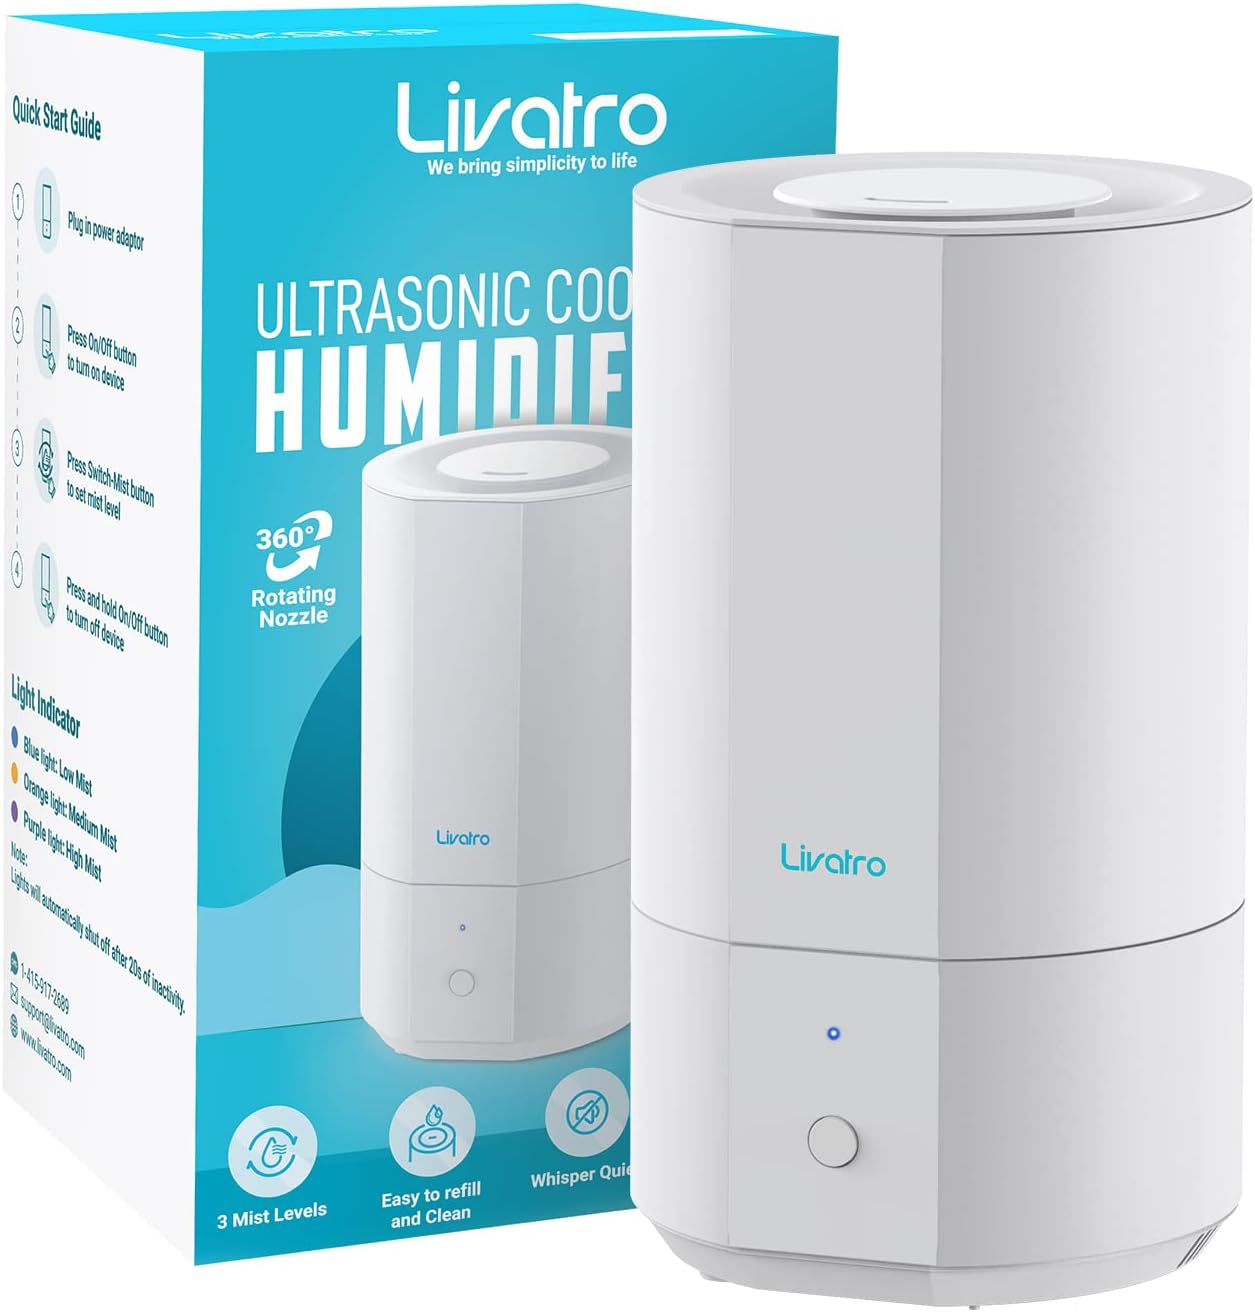 Livatro Humidifier Review post thumbnail image